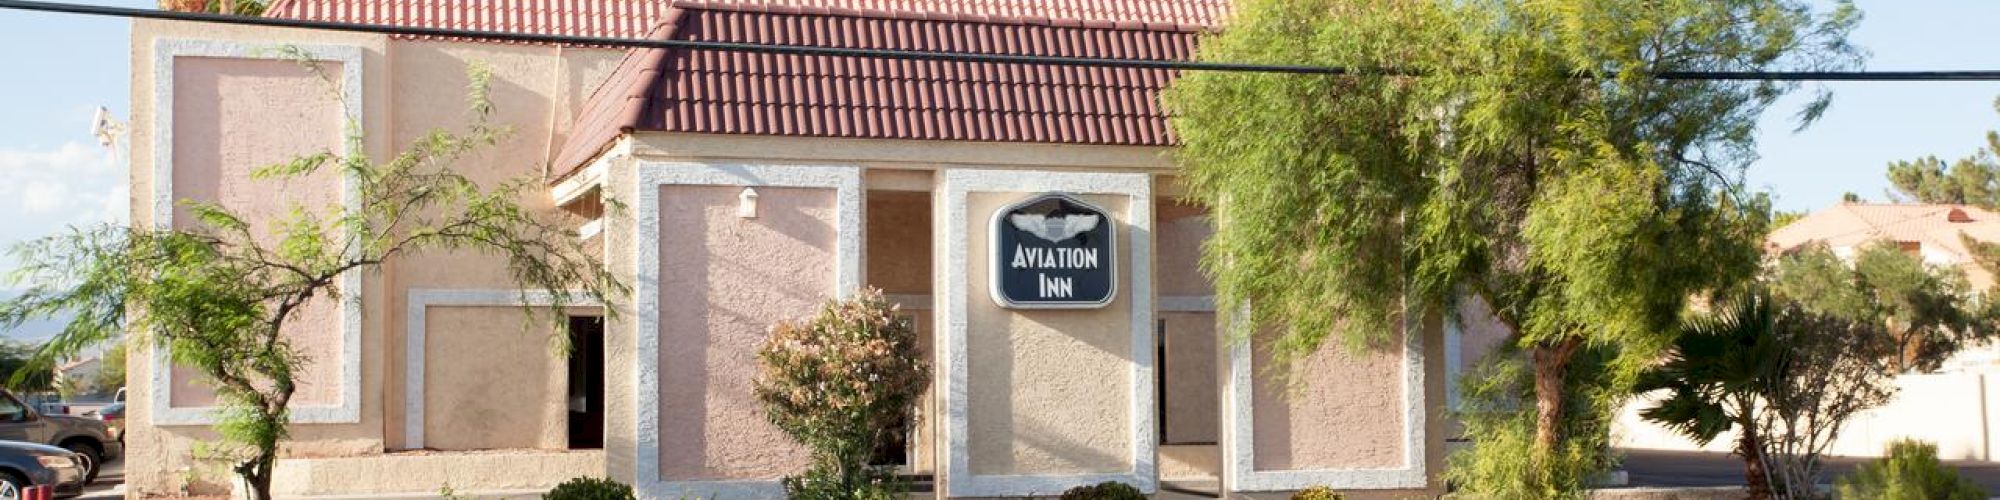 Aviation Inn